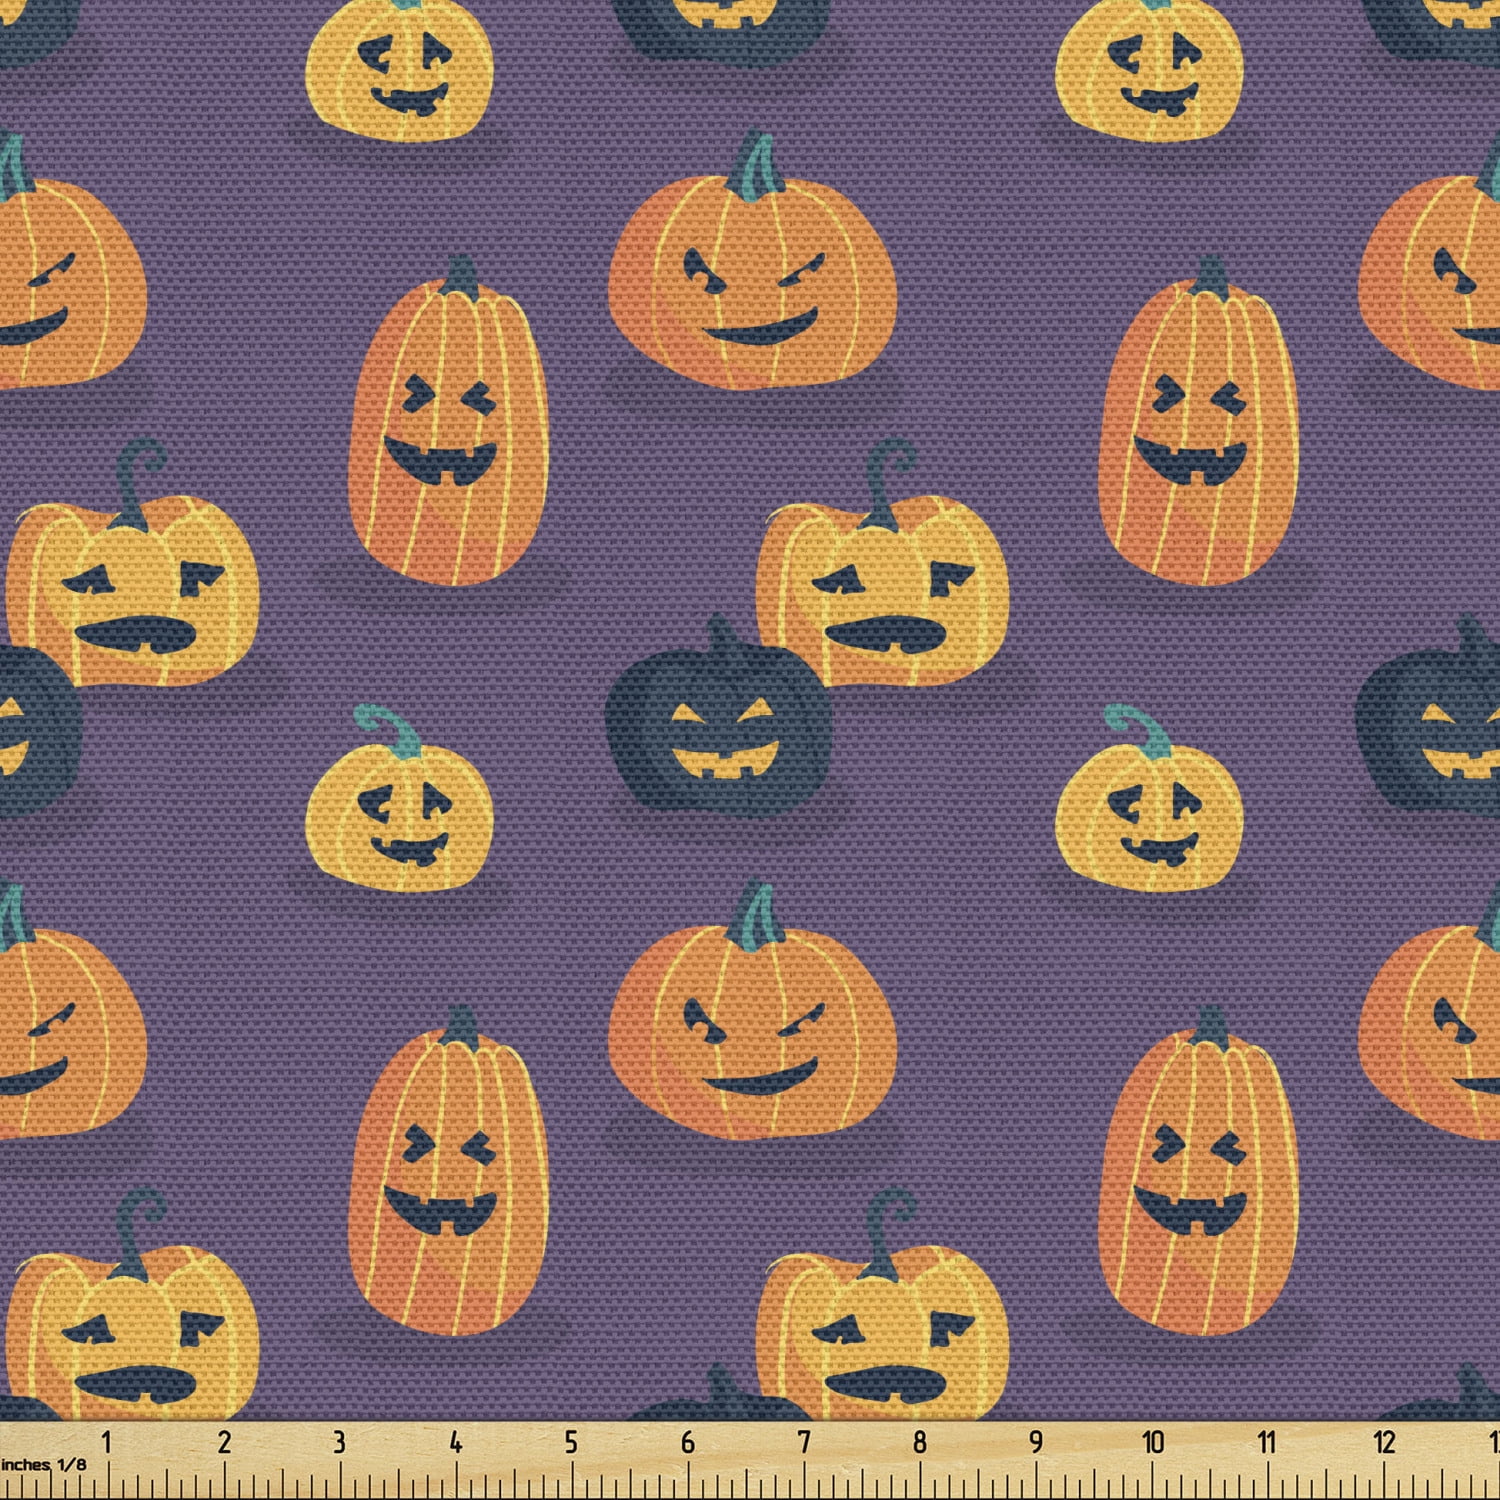 Funny Halloween David S Pumpkin Pumpkins Mobile Devices Jack O Lantern Tiled Pattern Desktop Wallpaper